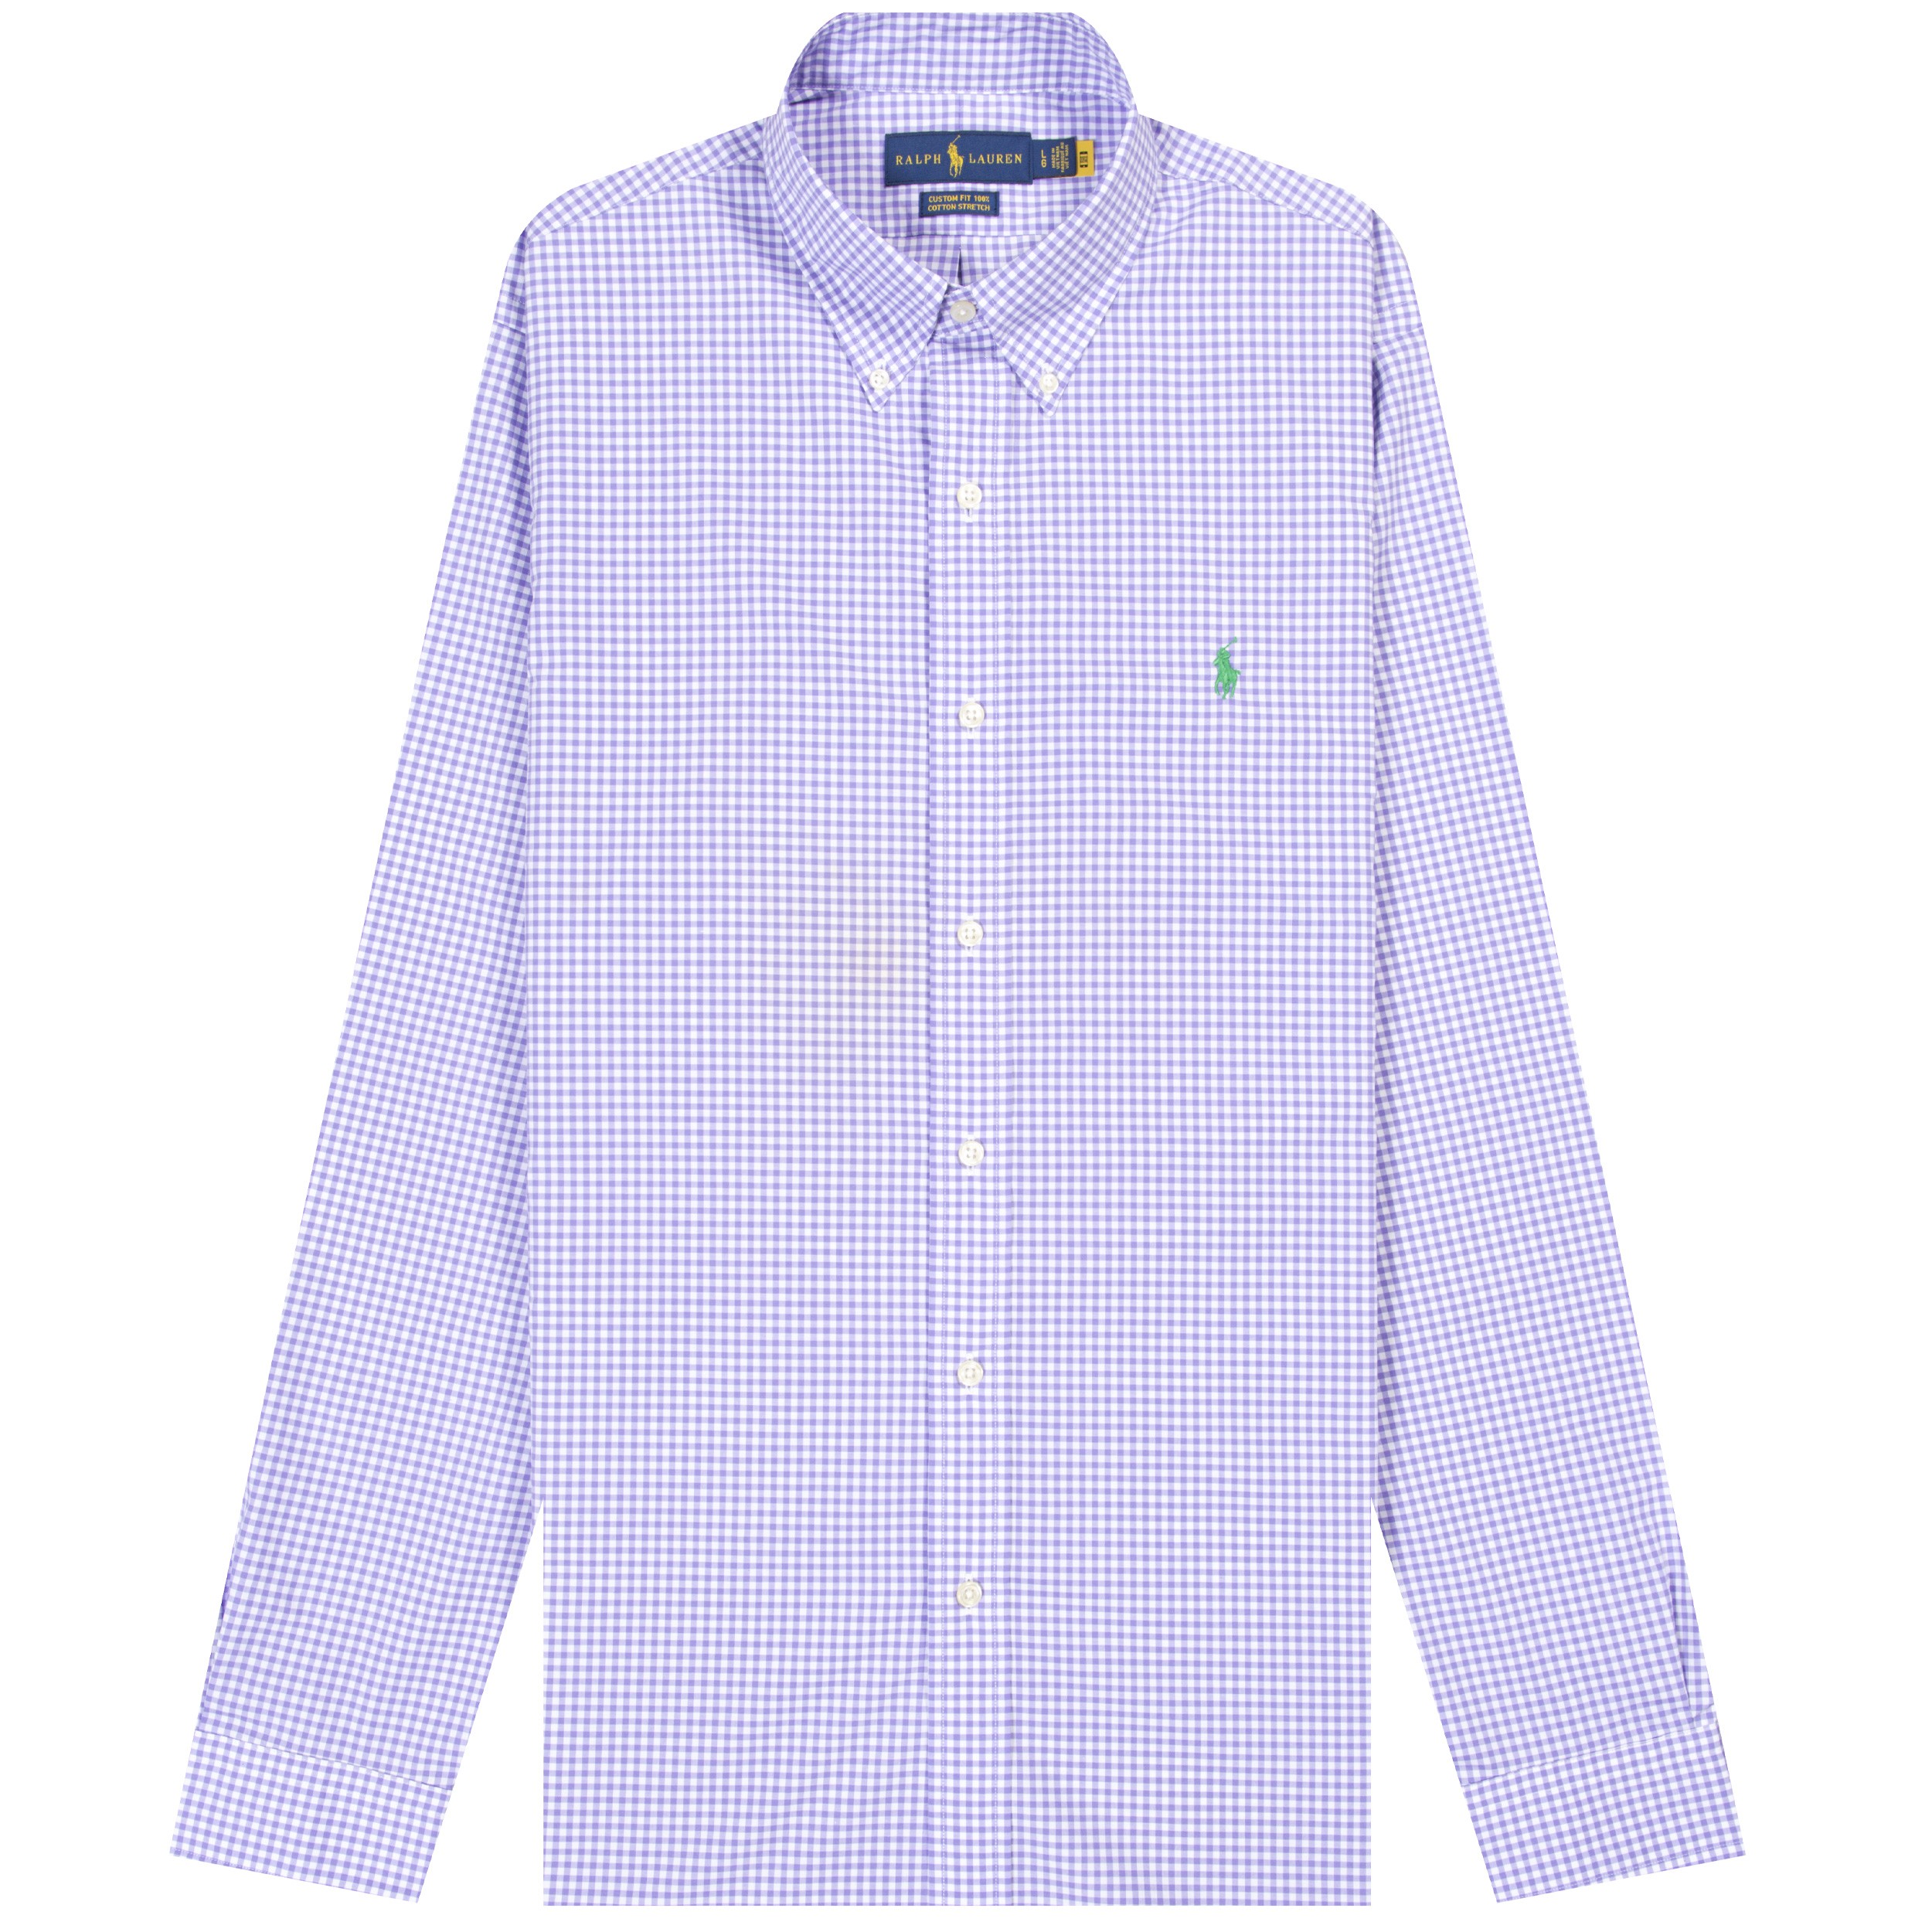 Polo Ralph Lauren 'Gingham' Check Shirt Purple/White